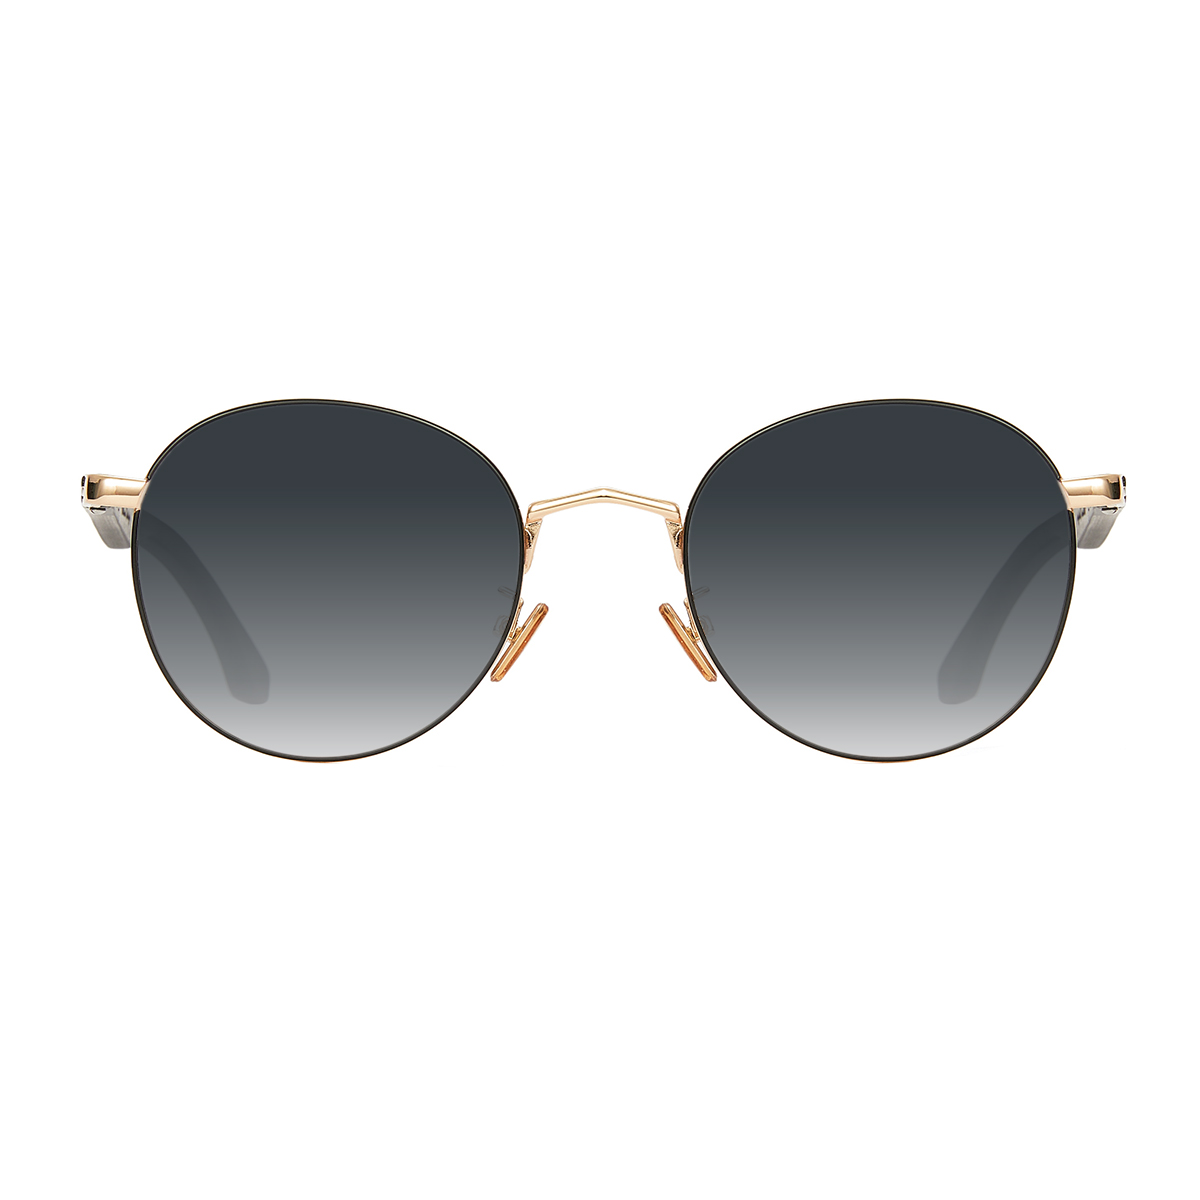 oval black-brown sunglasses